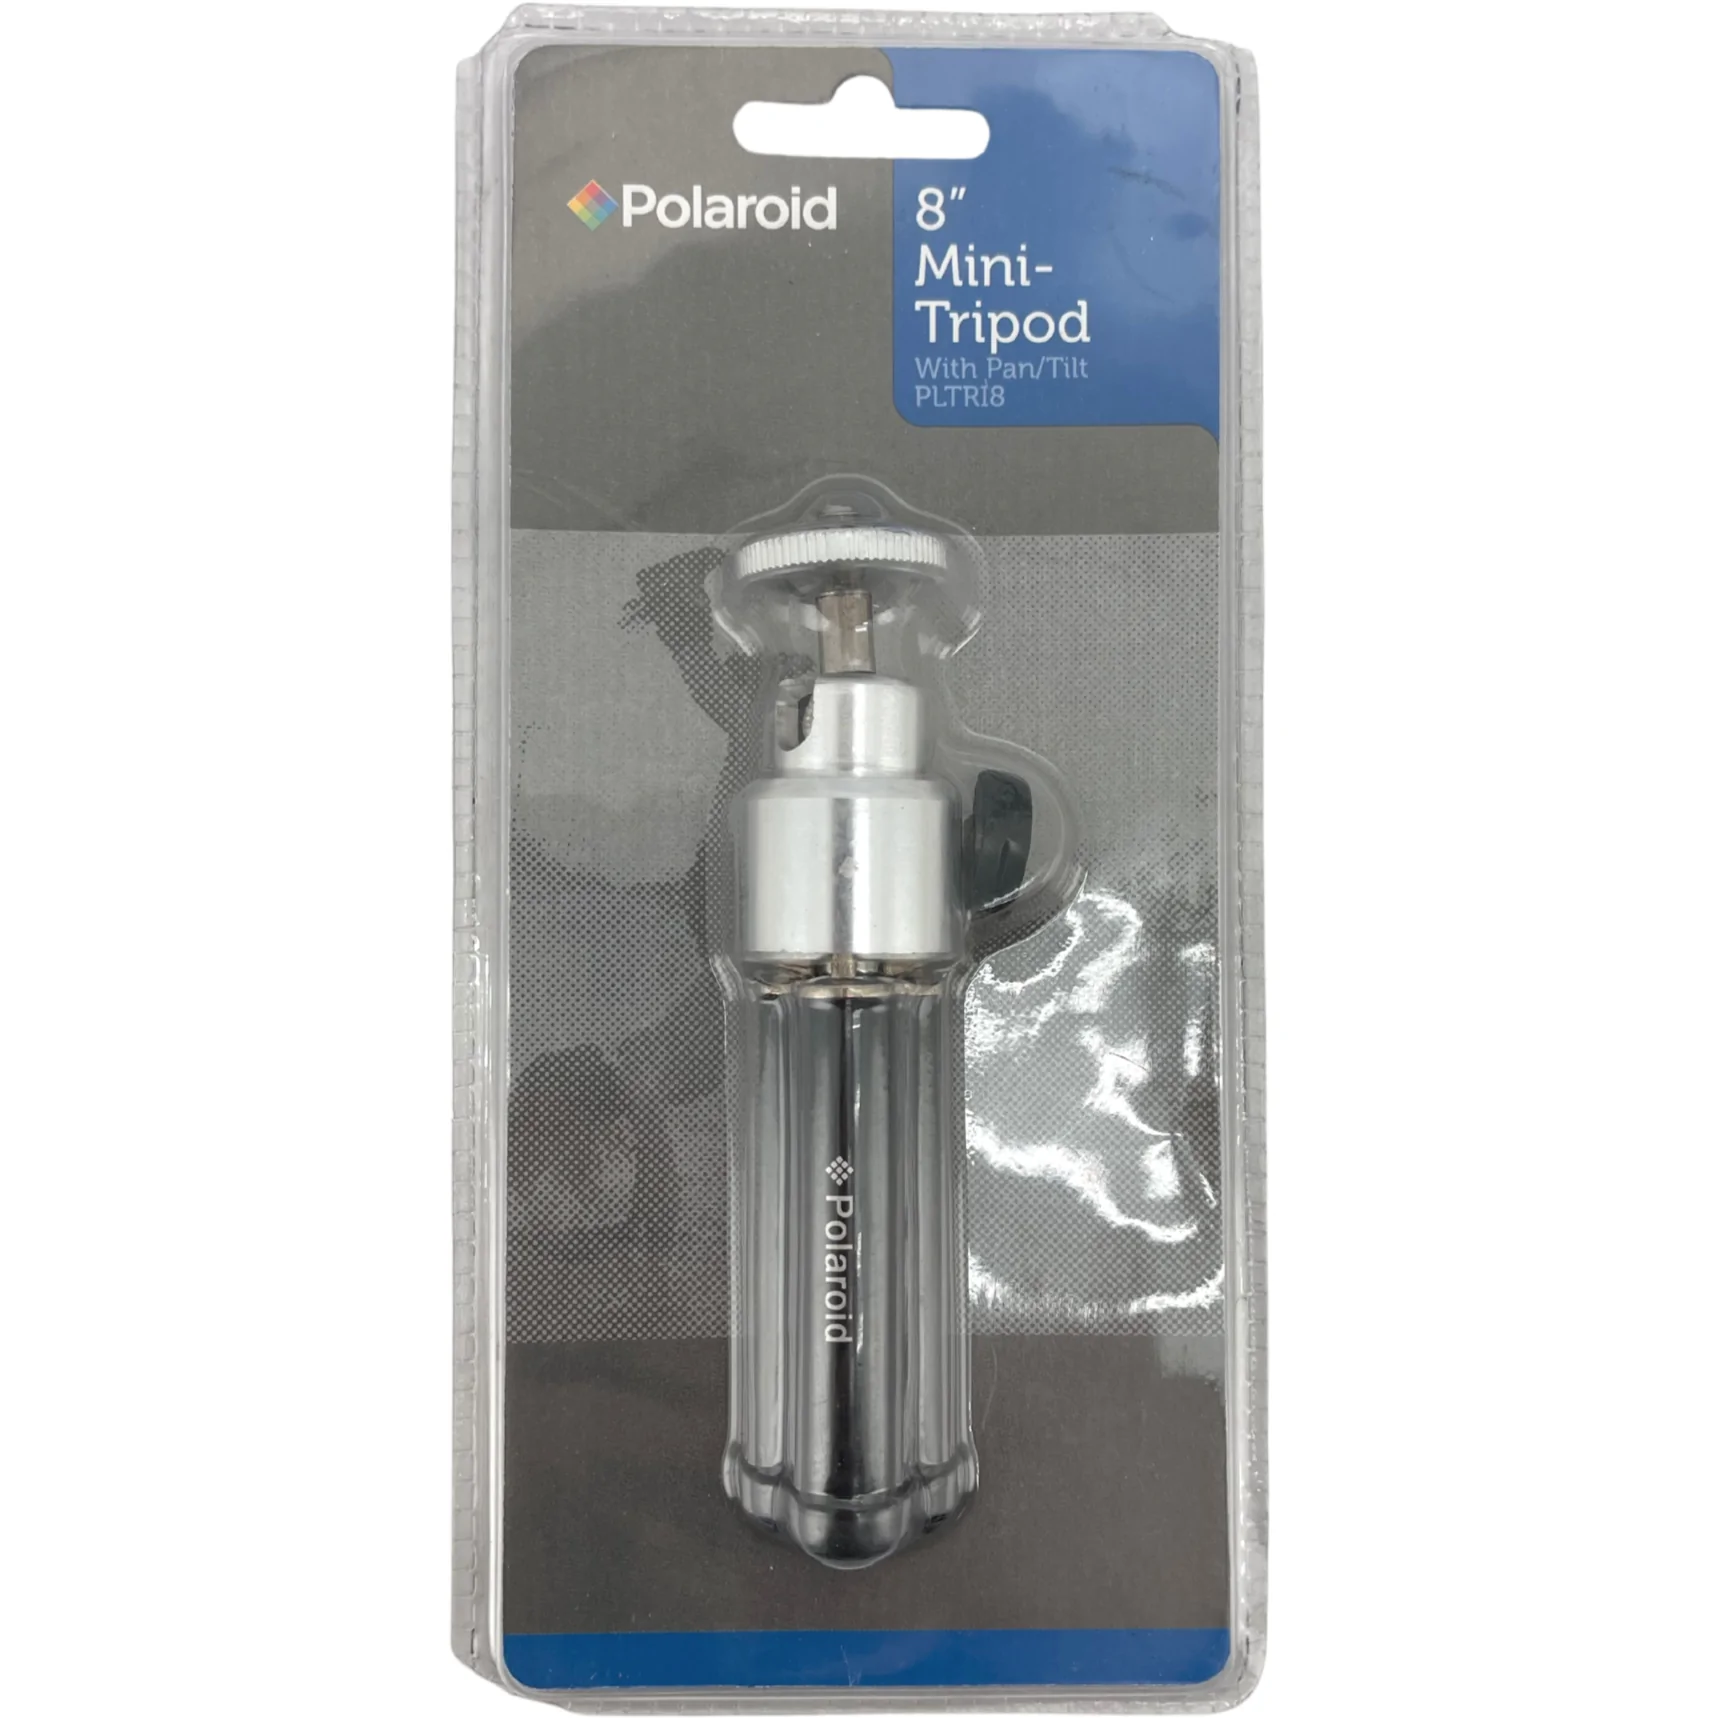 Polaroid Mini-Tripod / 8" Tripod / Camera Accessory / Tripod with Pan & Tilt